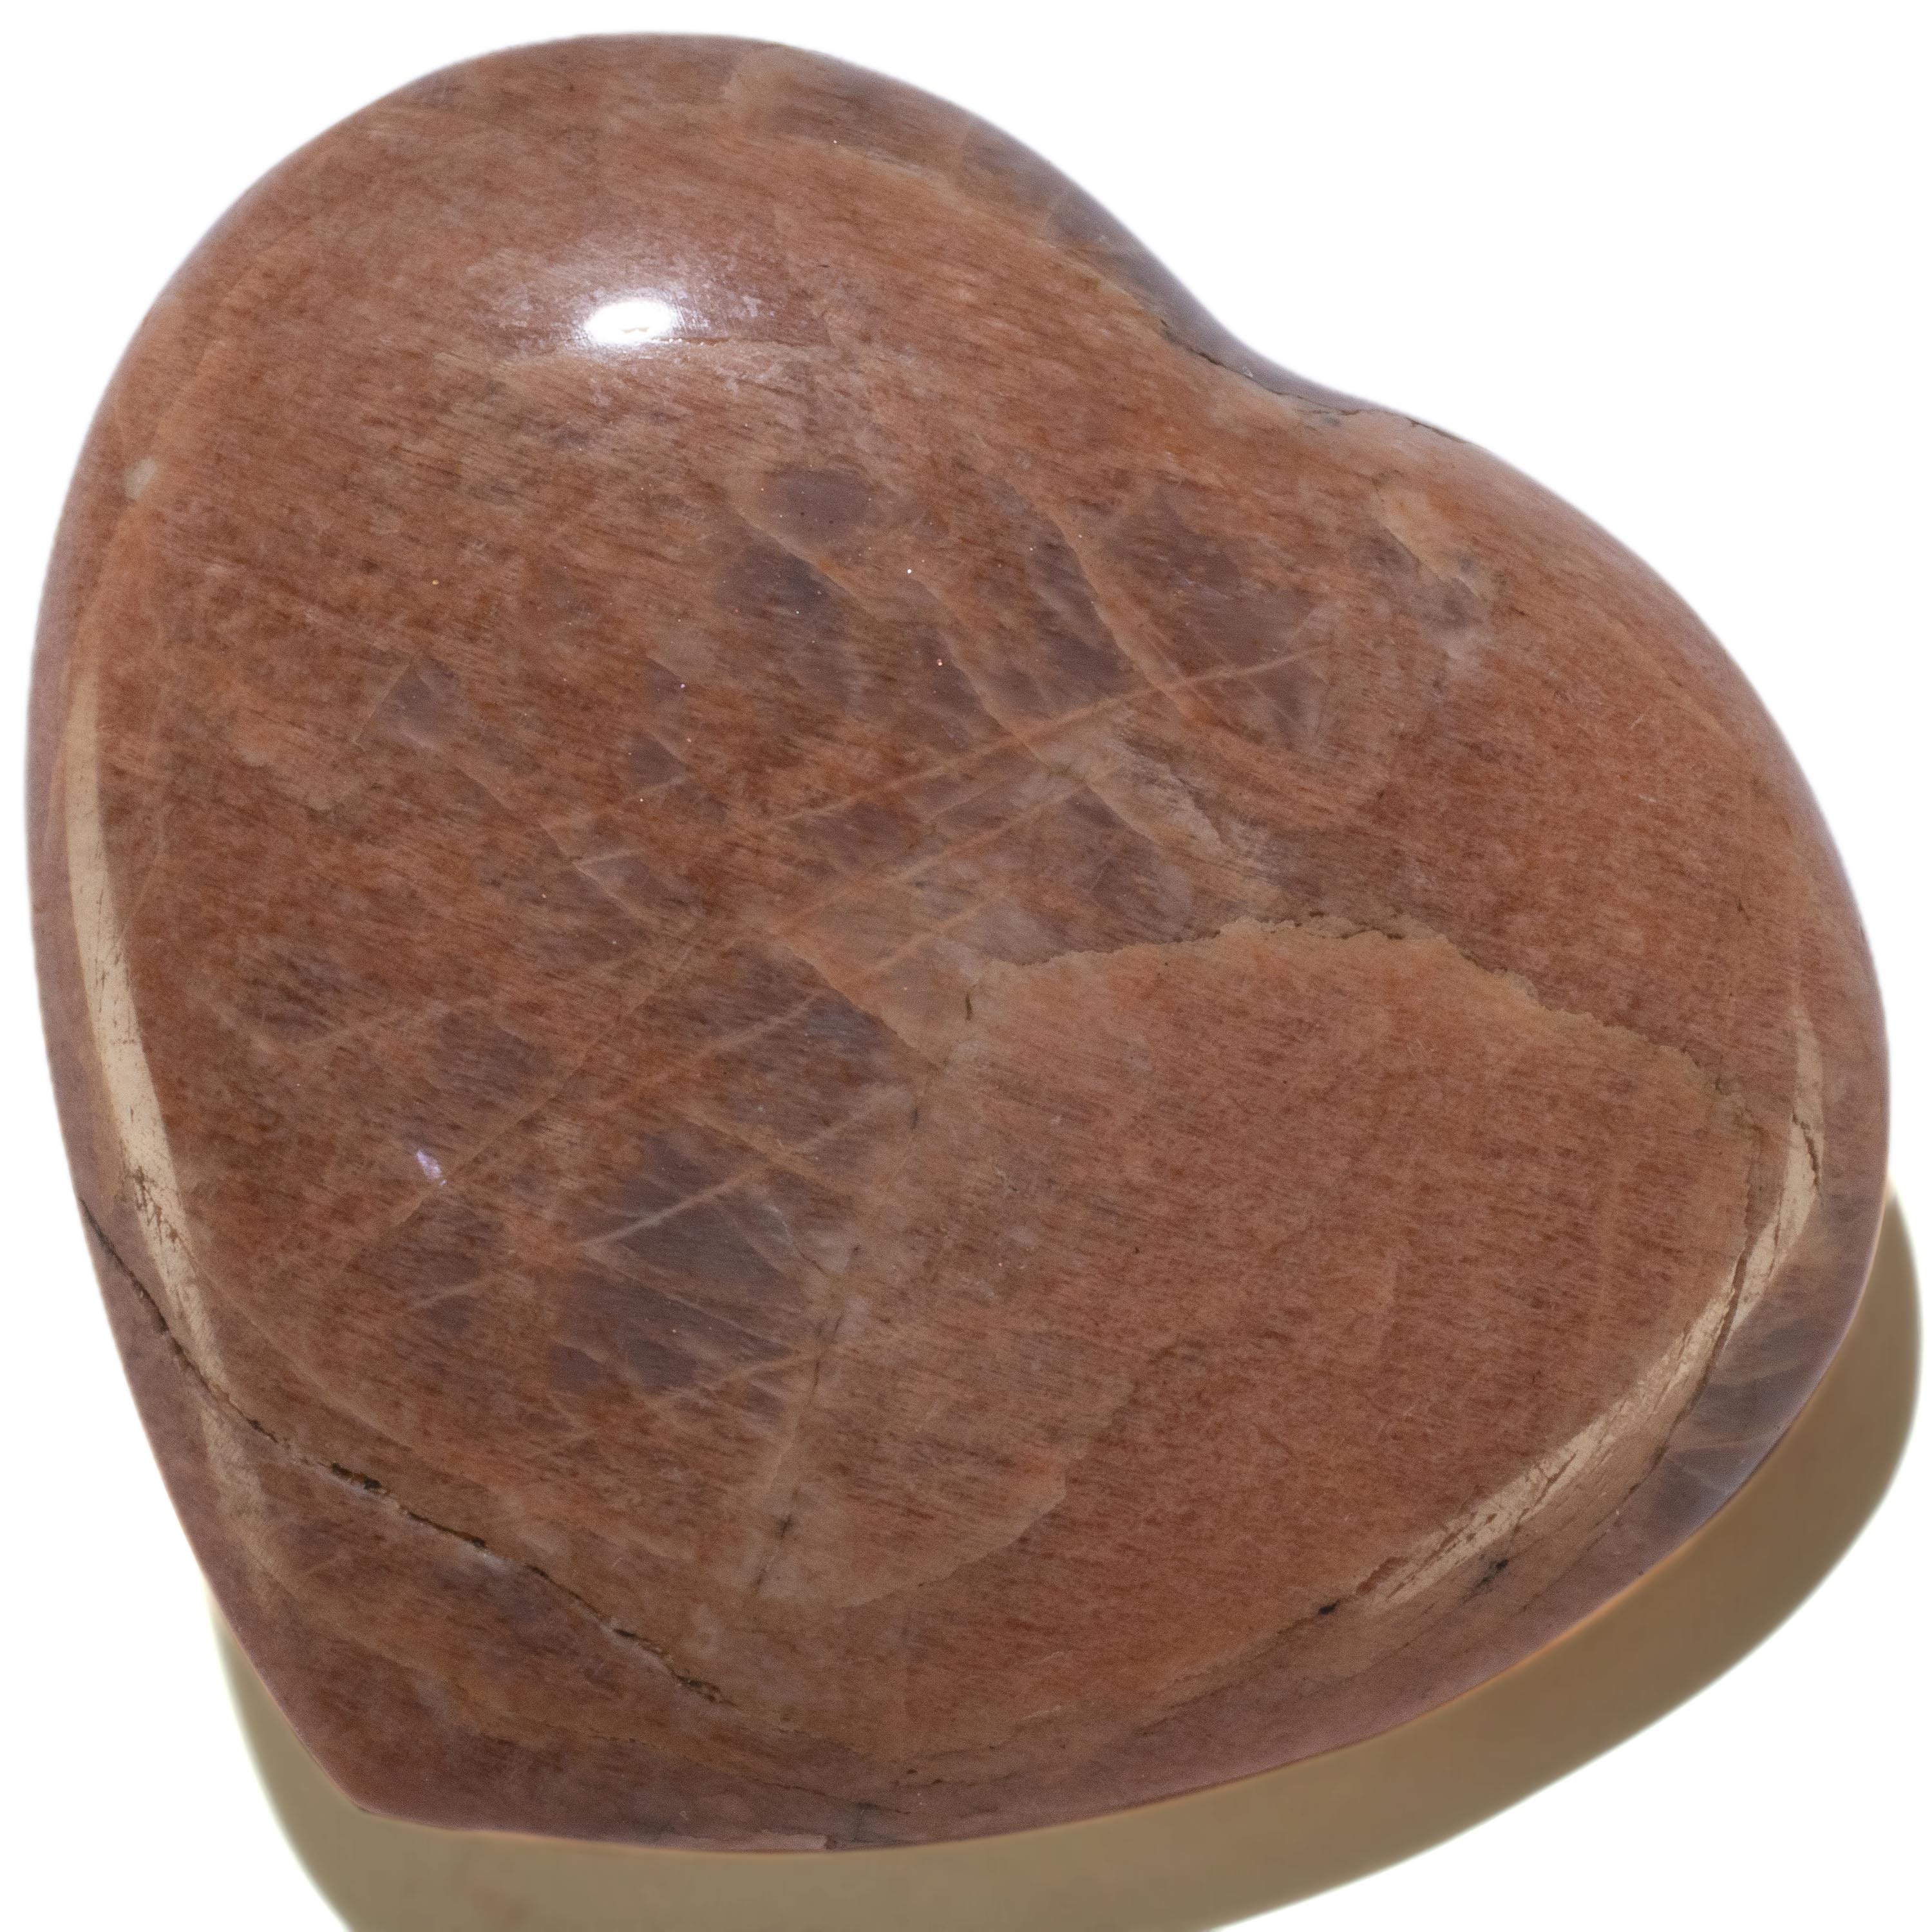 KALIFANO Peach Moonstone Peach Moonstone Gemstone Heart Carving 420g / 4in. GH400-PM